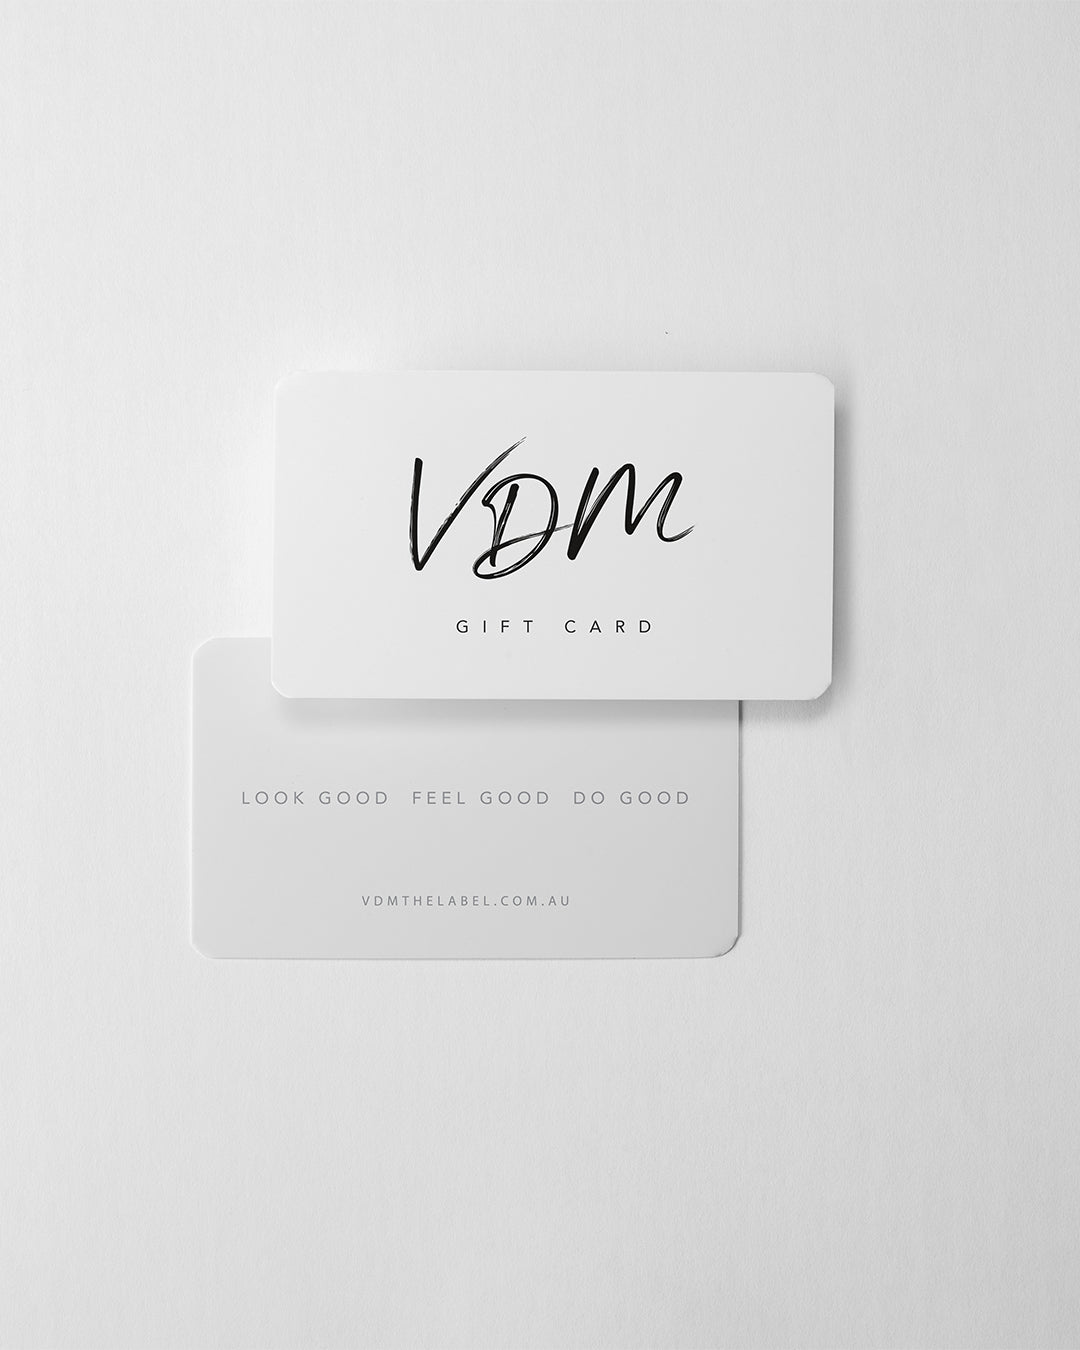 GIFT CARD - VDM 